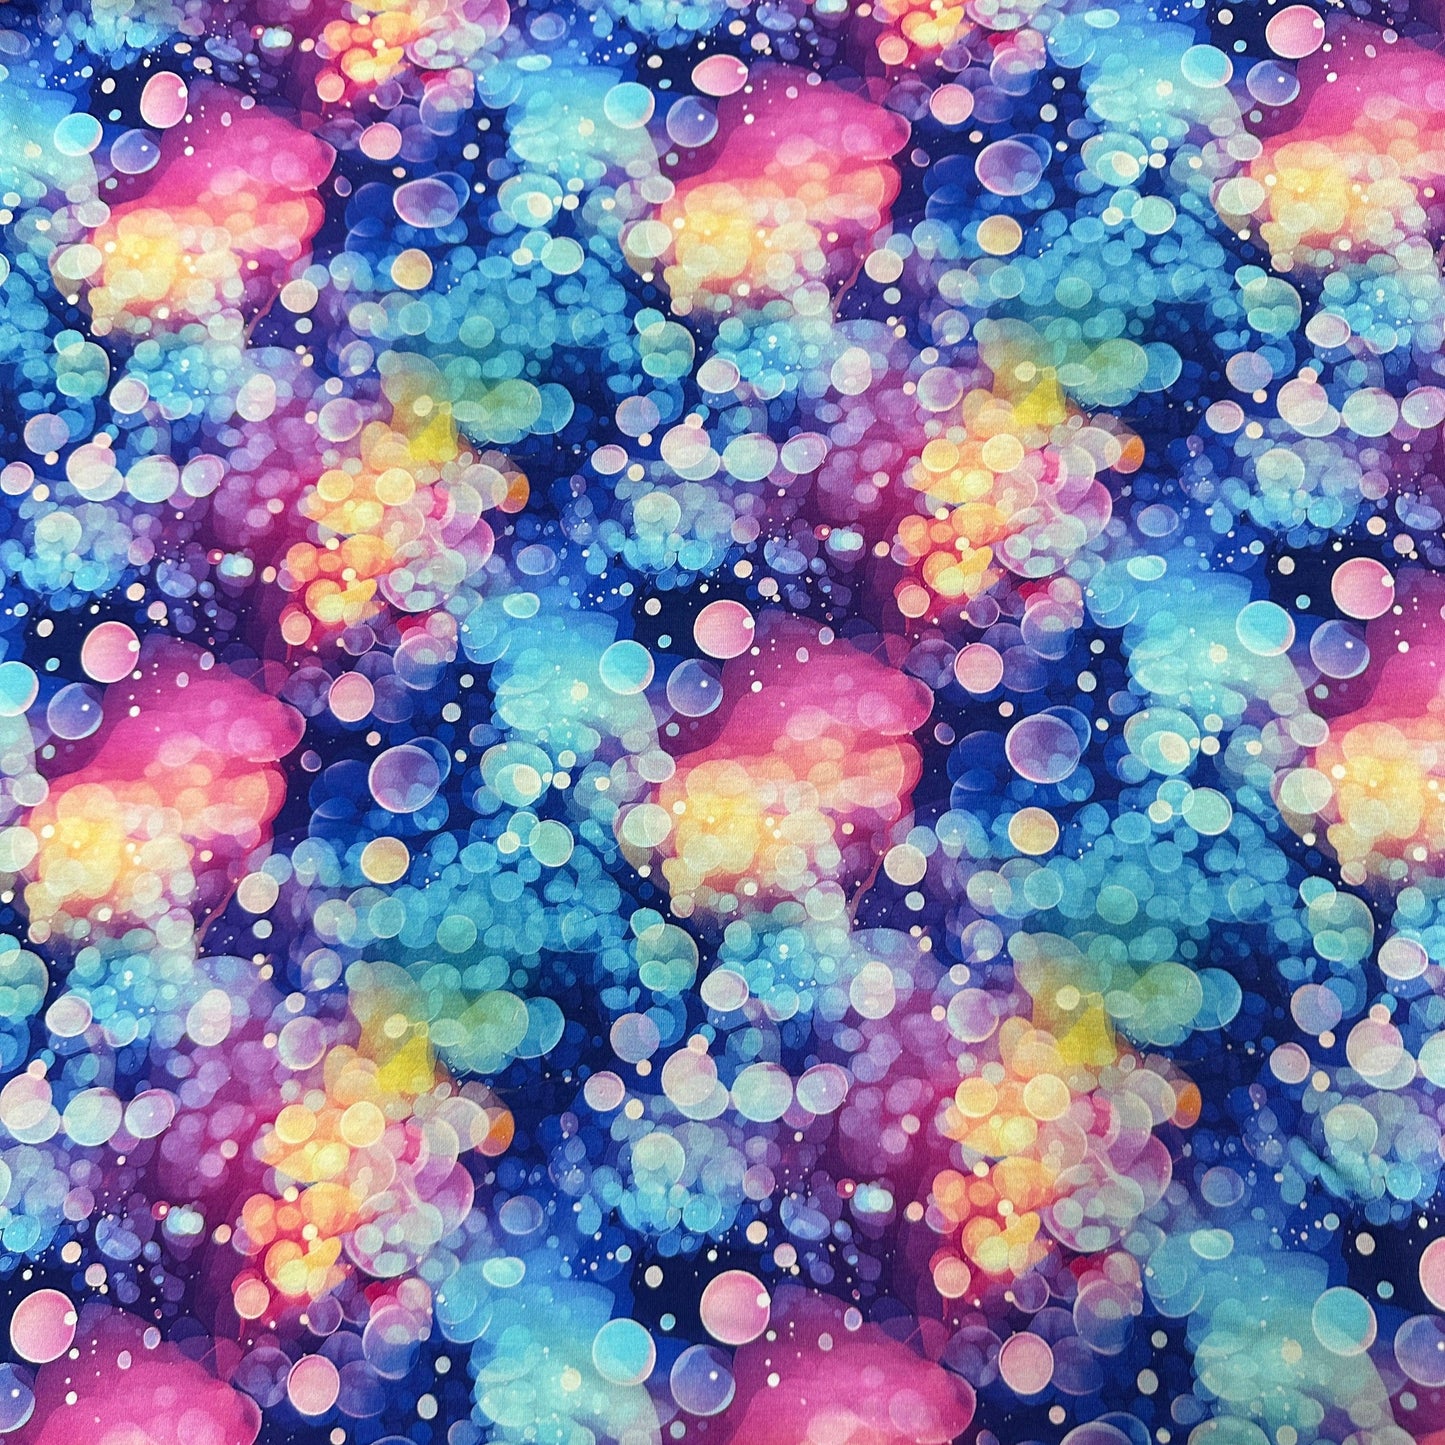 Rainbow Iridescent Bubbles on Bamboo/Spandex Jersey Fabric - Nature's Fabrics